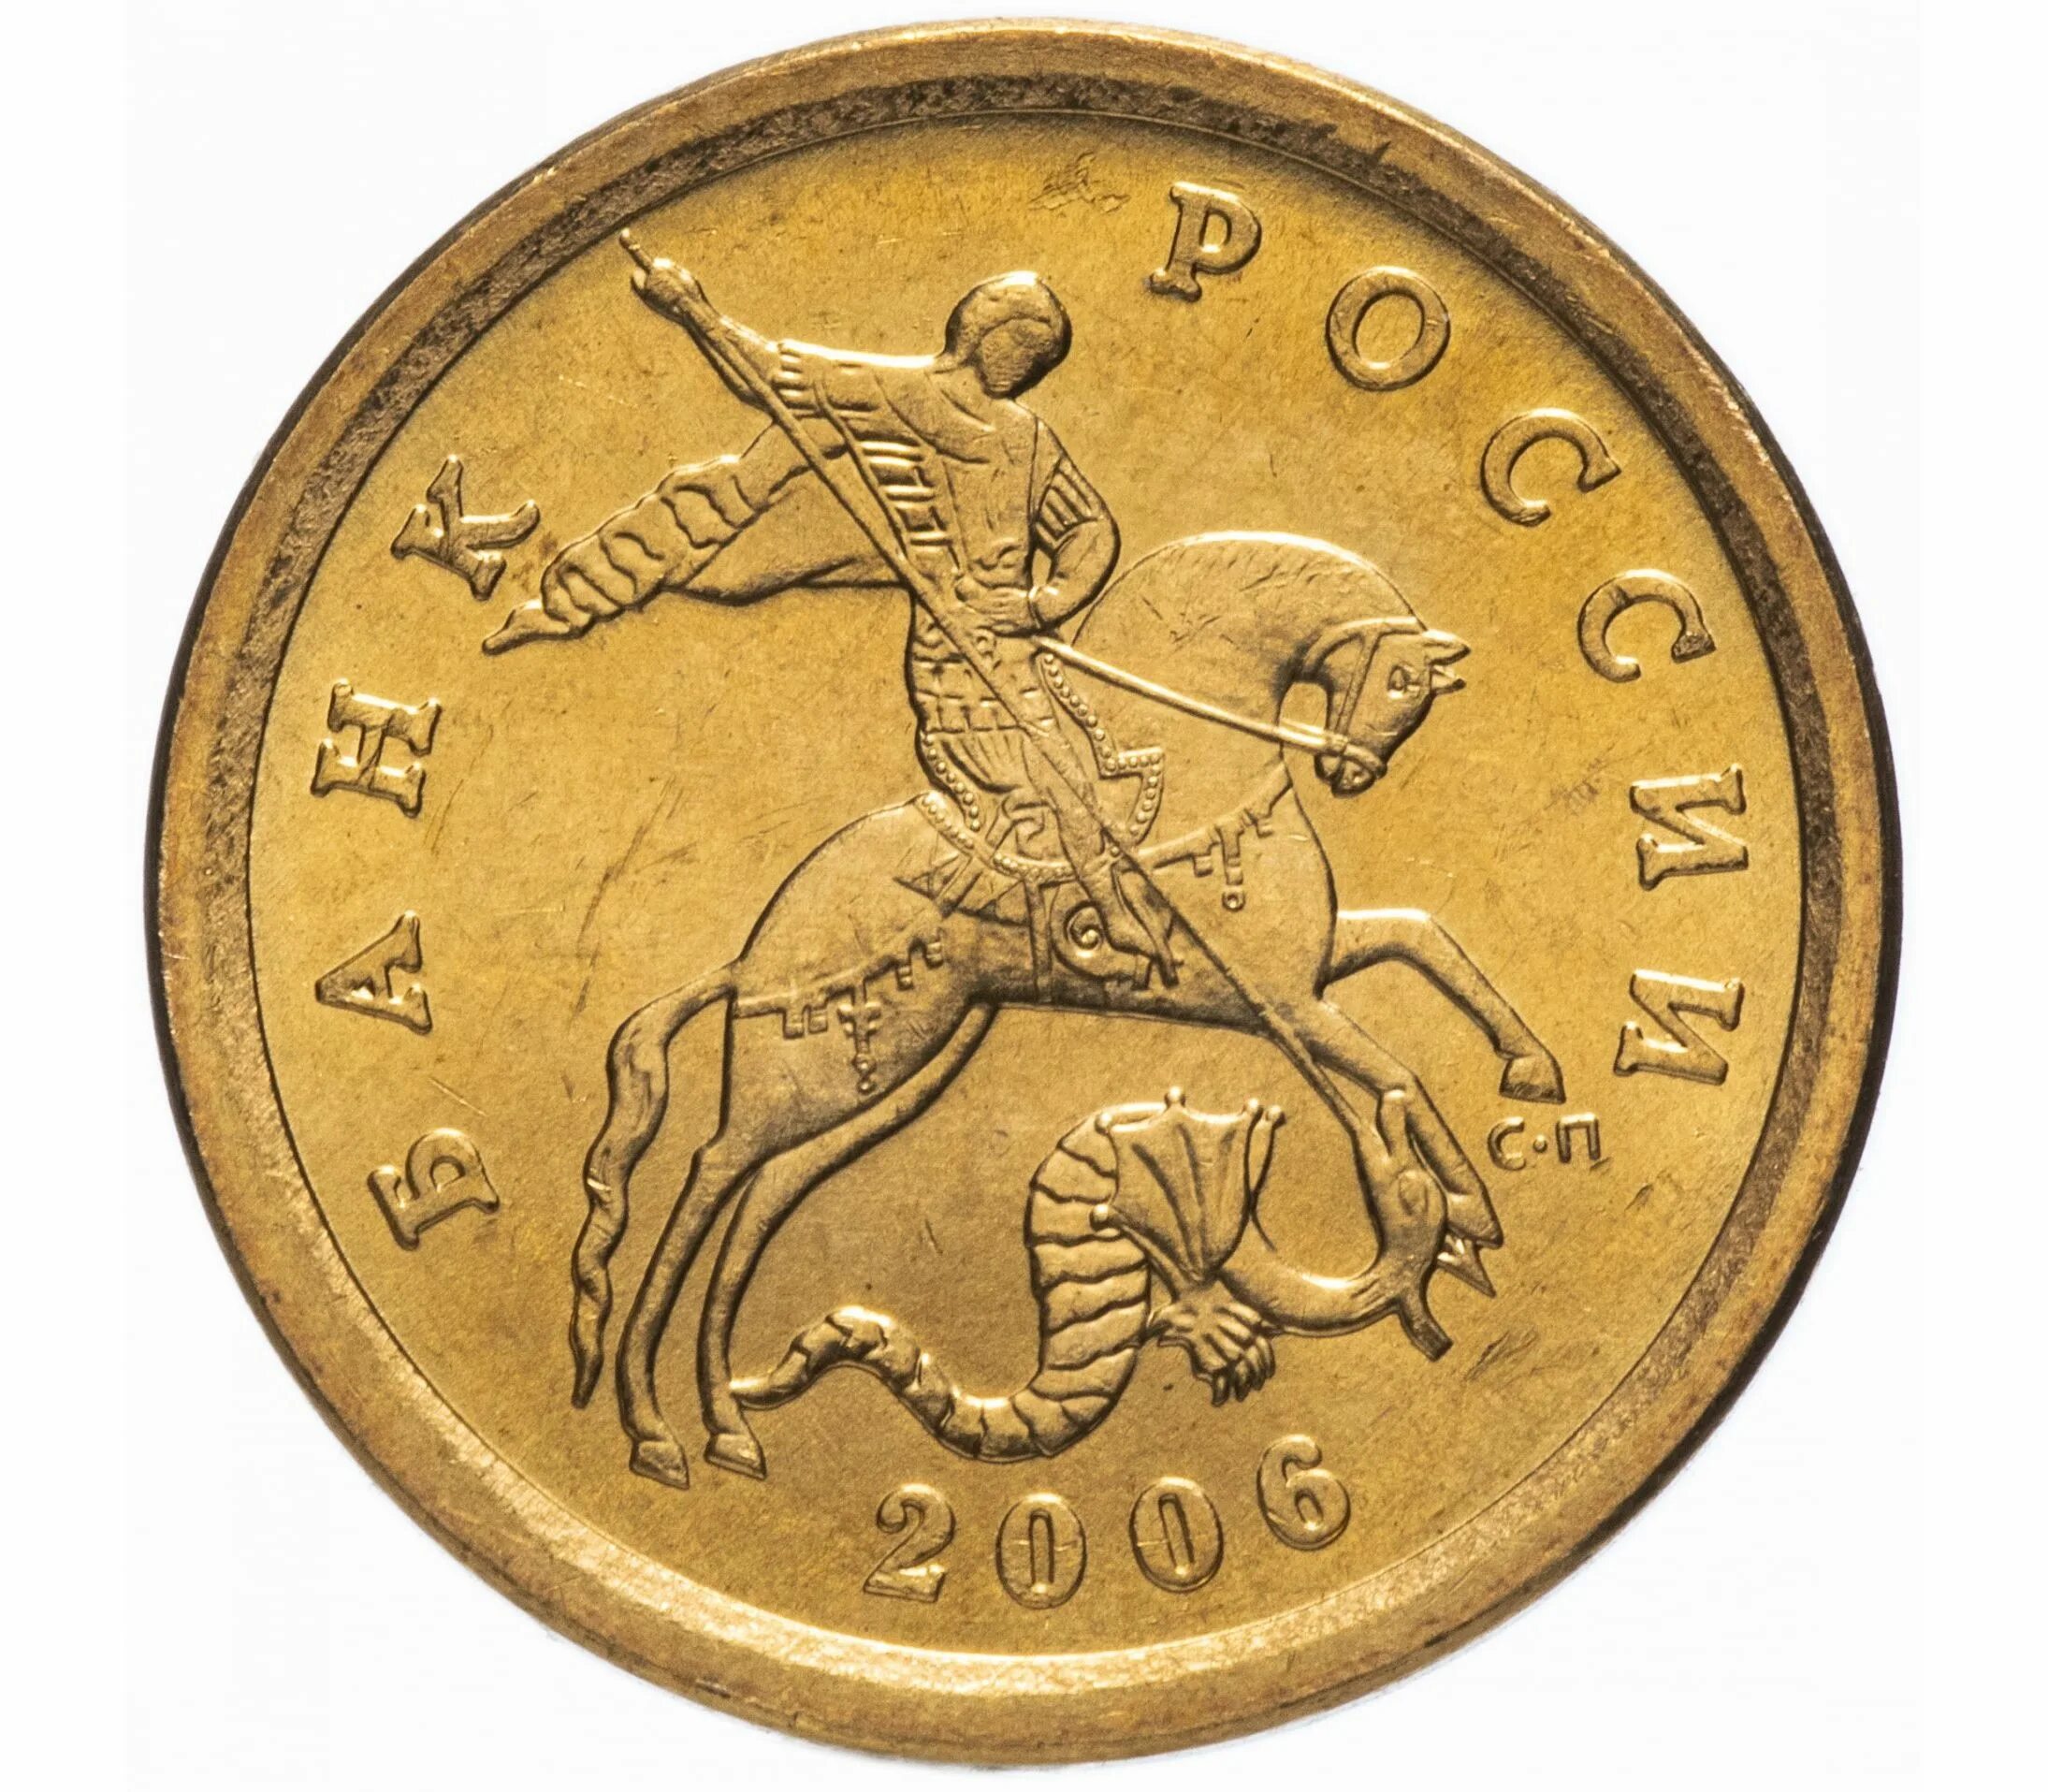 Какие монеты дал папа марине. Монета 50 копеек 2007 СП. 5 Копеек 2001. 5 Копеек 2001 м. 1 Копейка 2001 м.